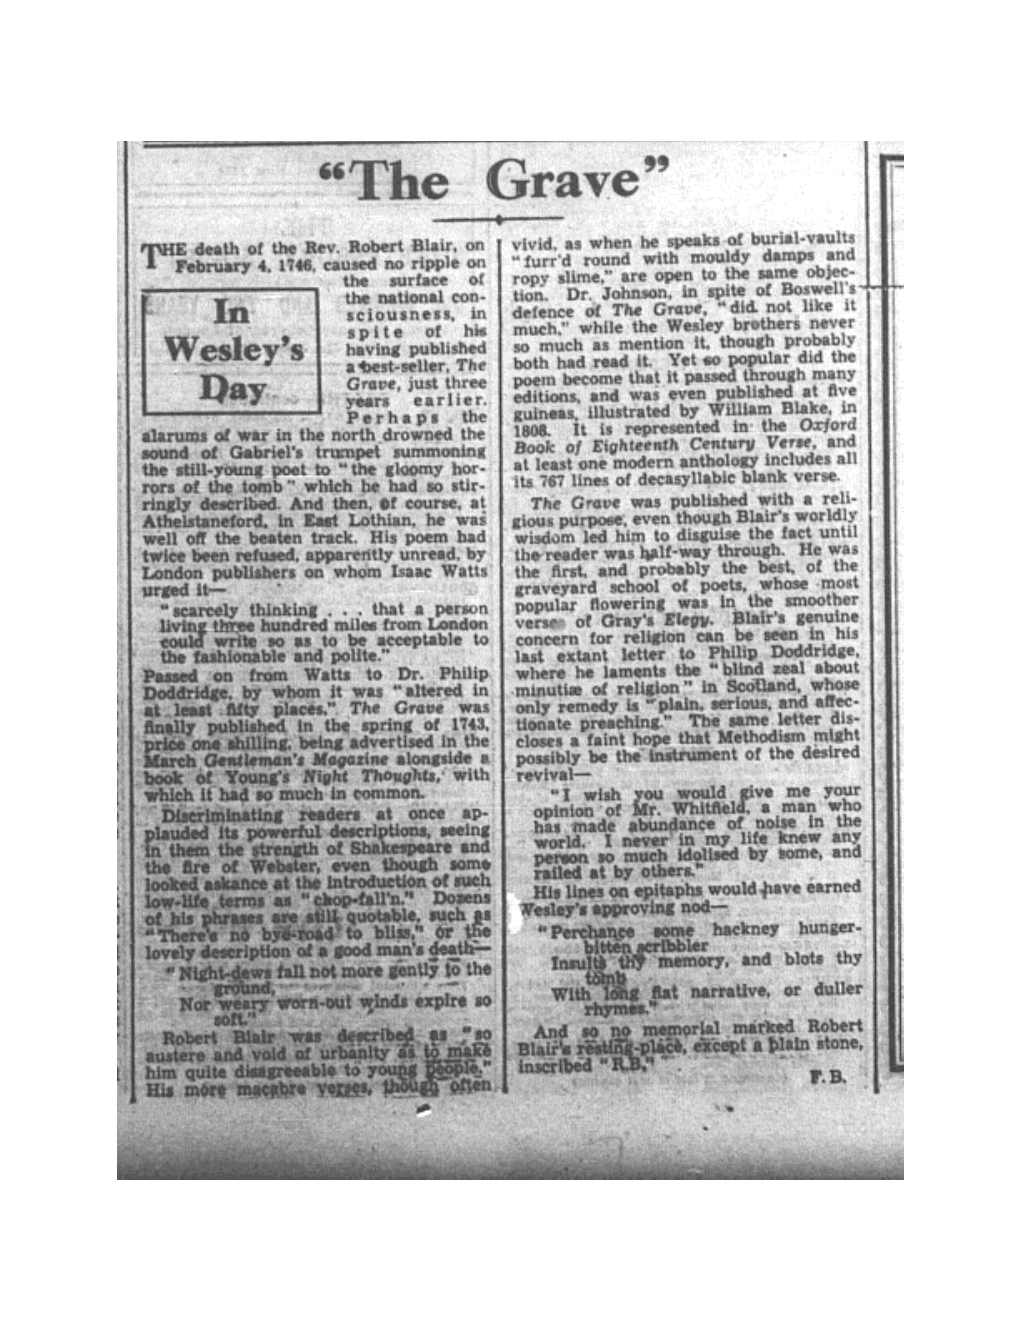 “The Grave.” Methodist Recorder (February 7, 1946): 1